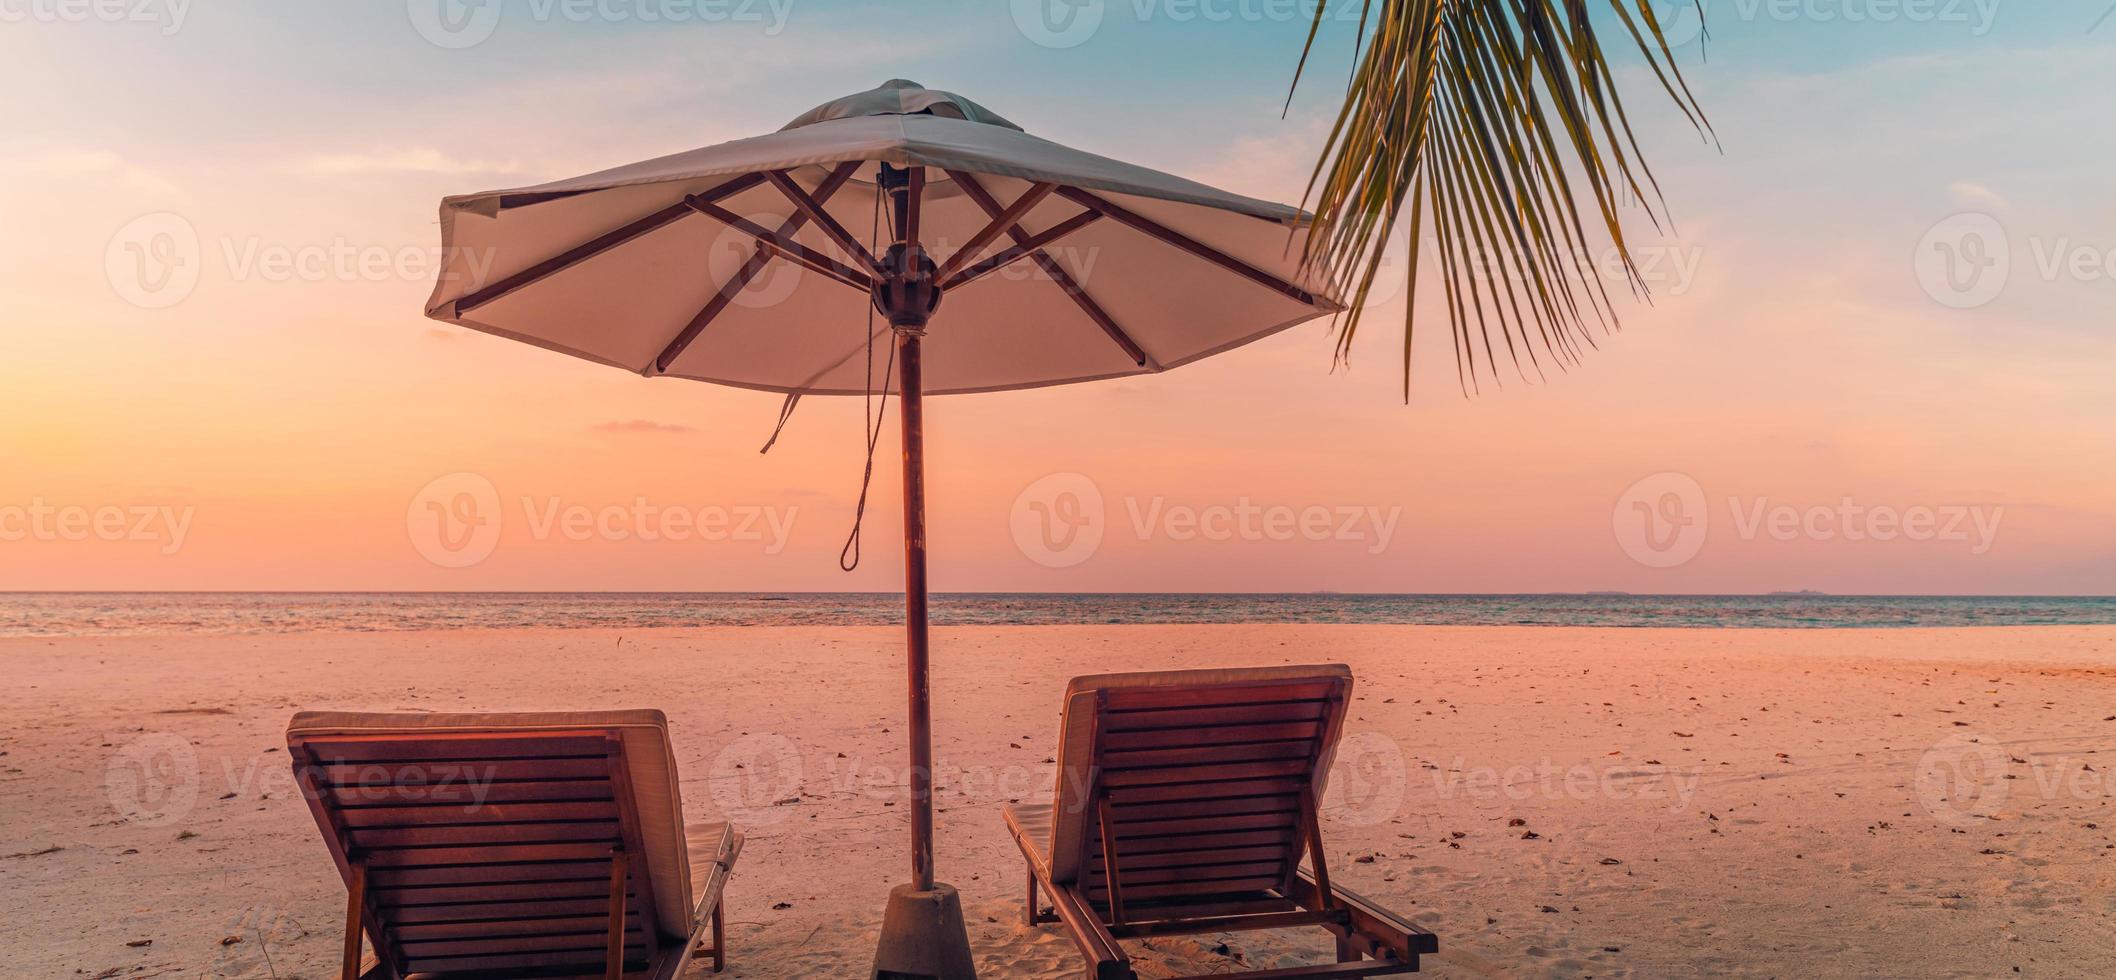 hermosa playa panorámica. sillas sombrilla playa de arena, paisaje marino de hojas de palma. turismo de vacaciones de verano. increíble paisaje tropical. paisaje tranquilo, playa relajante, paisaje tropical panorama foto